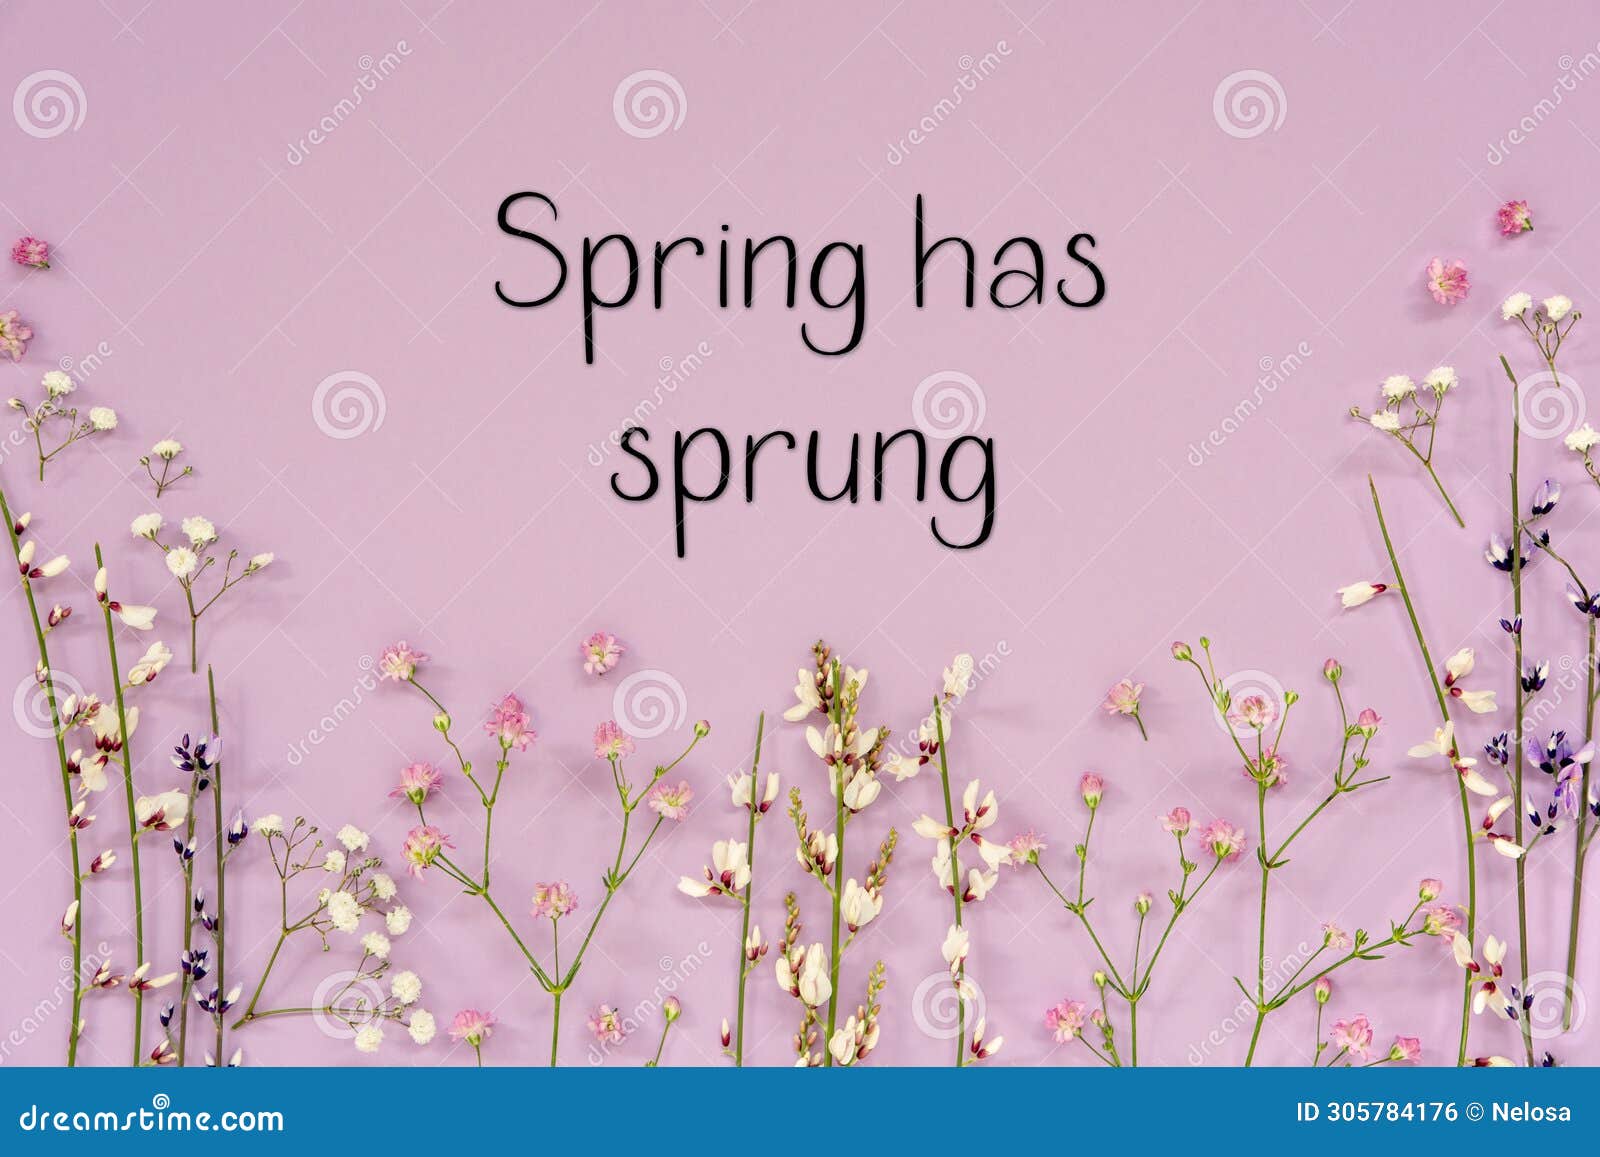 purple spring flower arrangement, english text spring has sprung